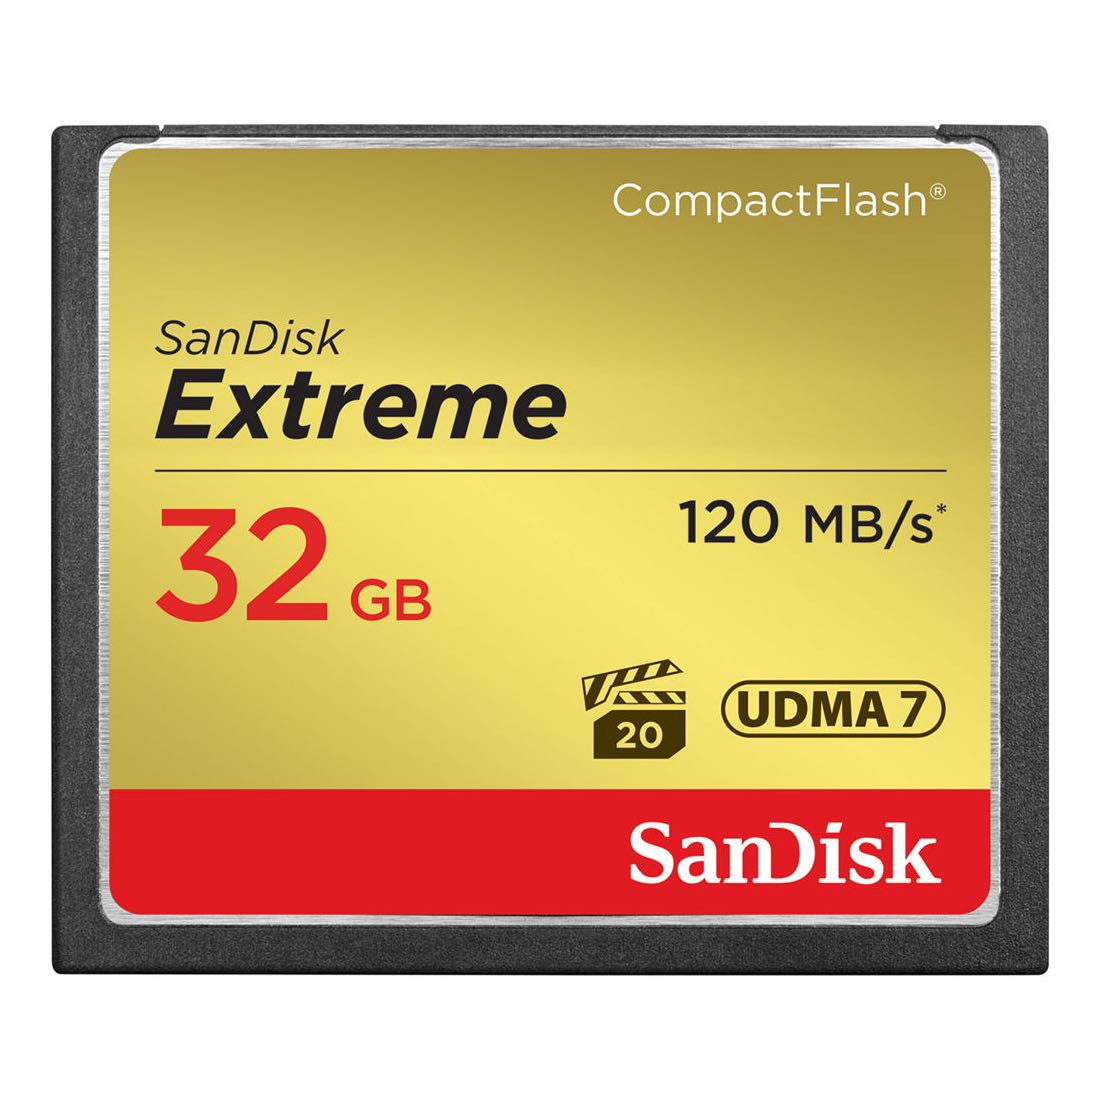 TThumbnail image for SanDisk 32GB Extreme CompactFlash